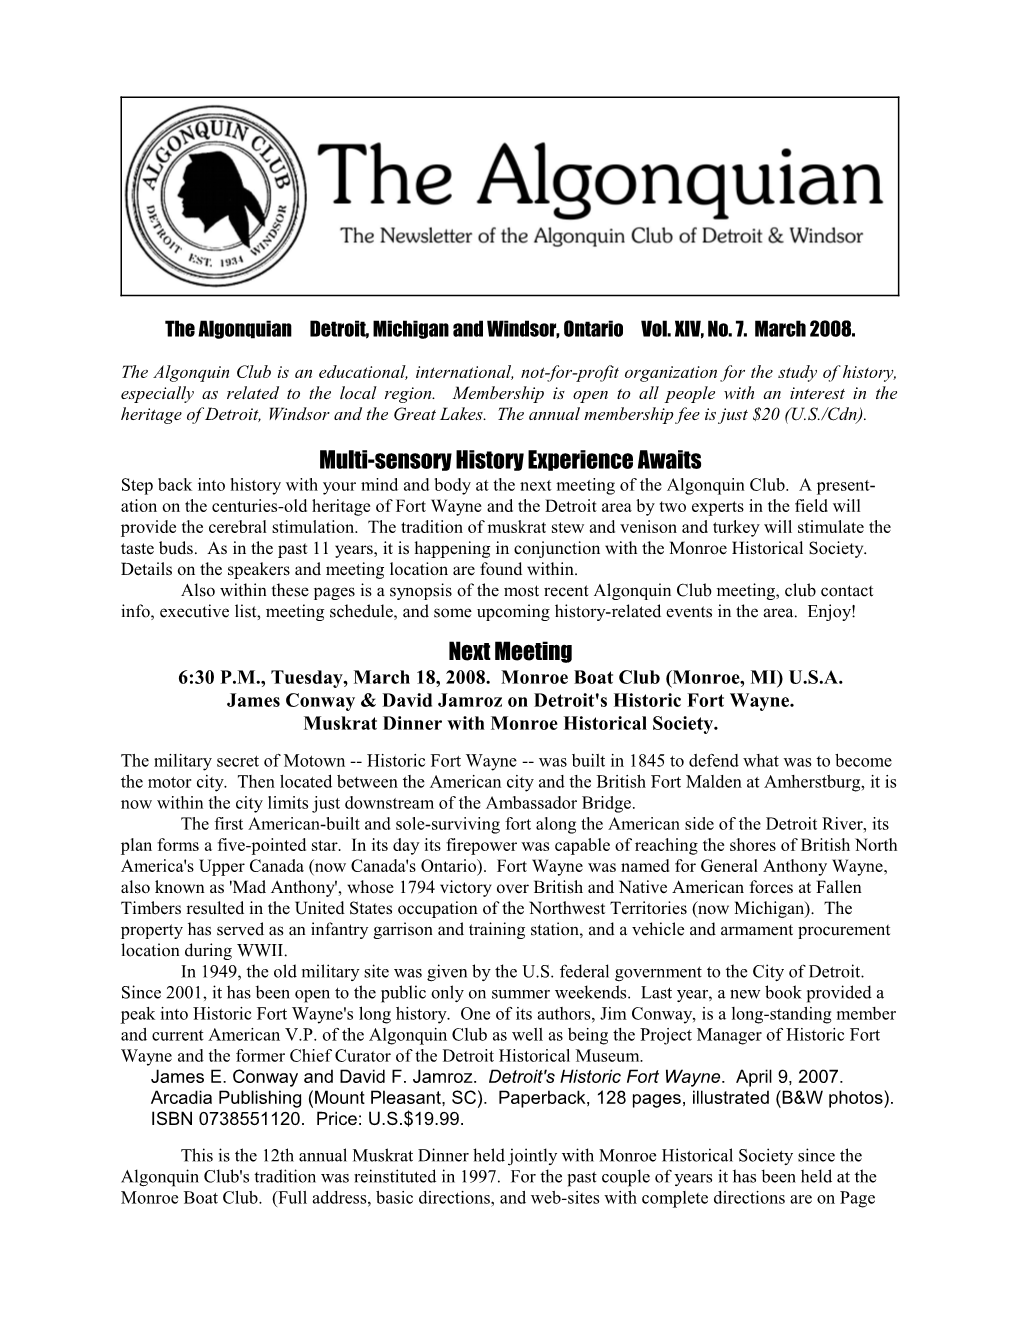 The Algonquian, Detroit & Windsor